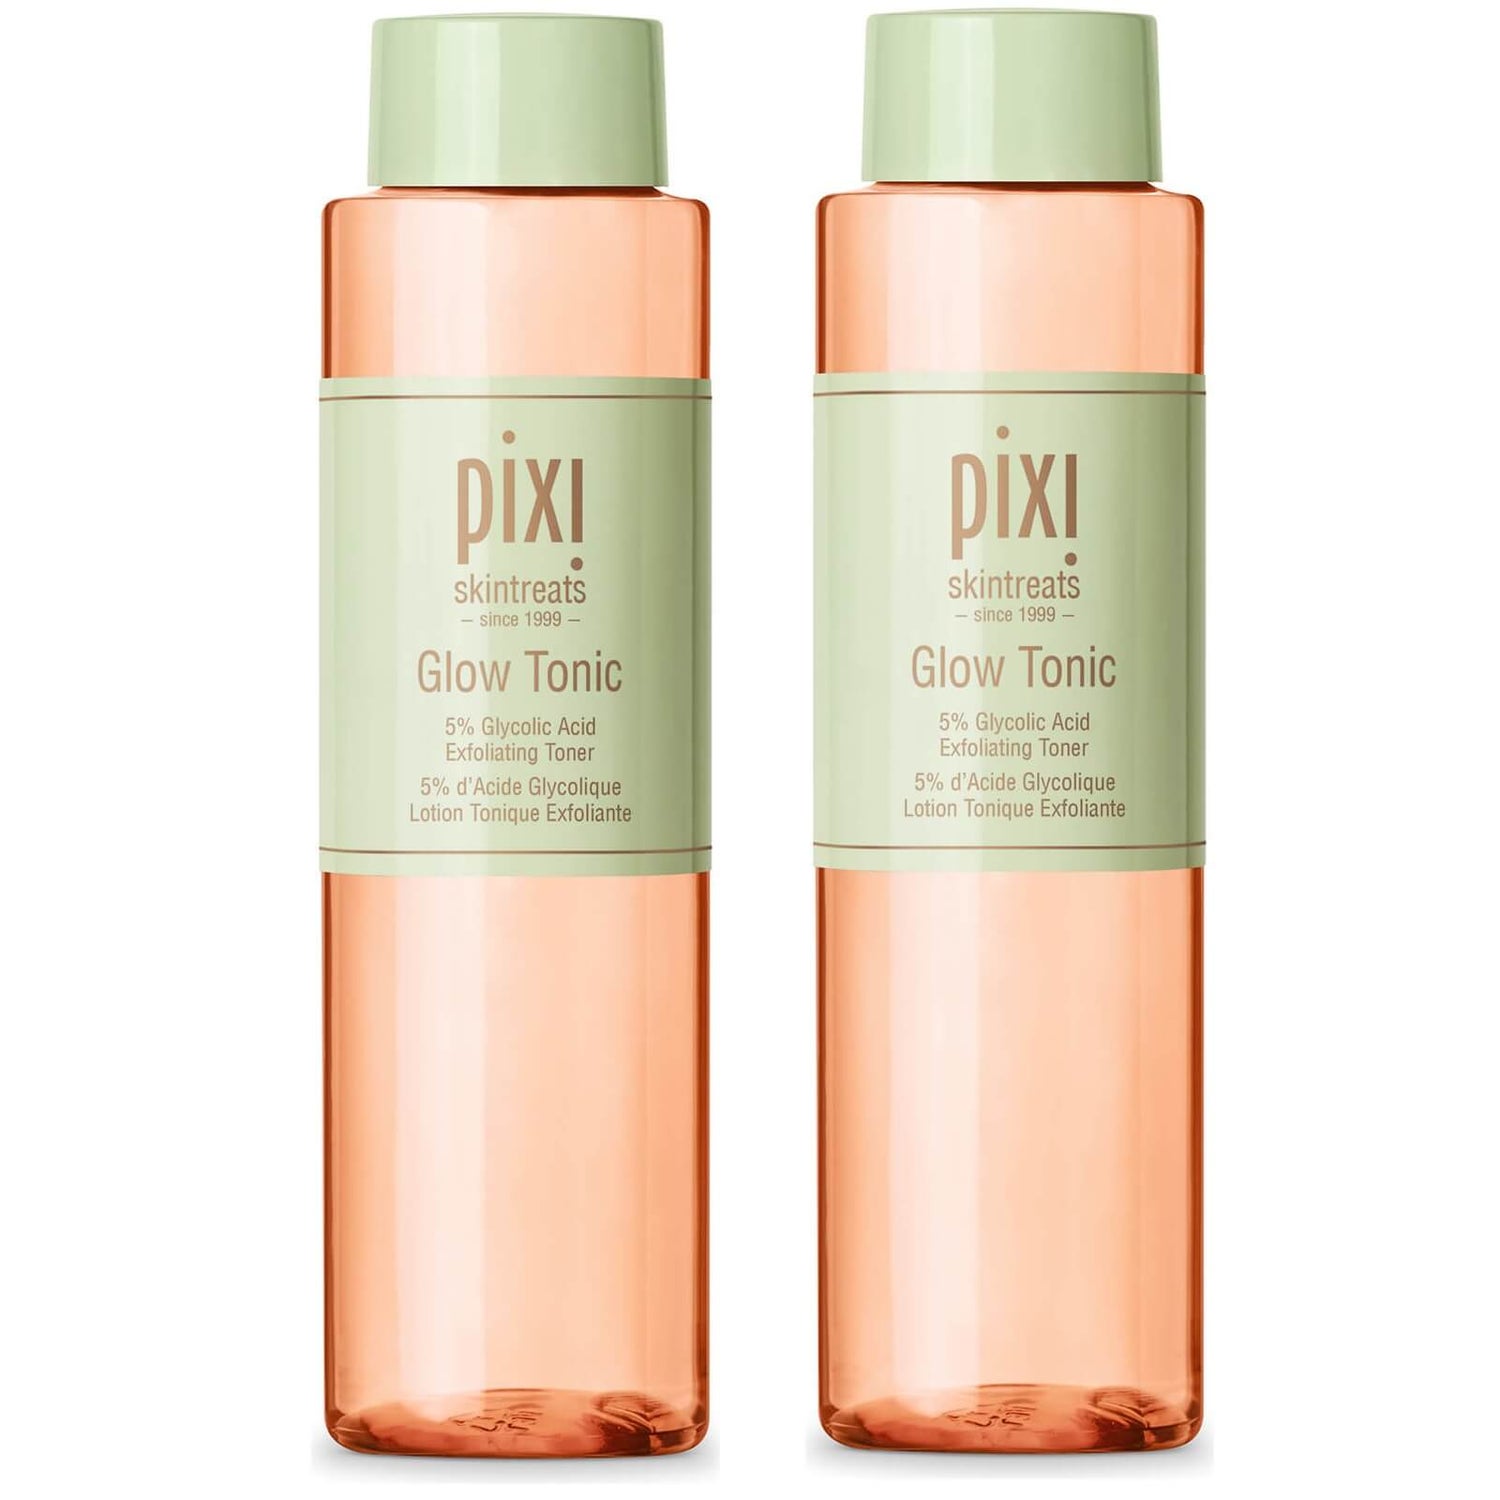 PIXI Glow Tonic Duo - Exclusive